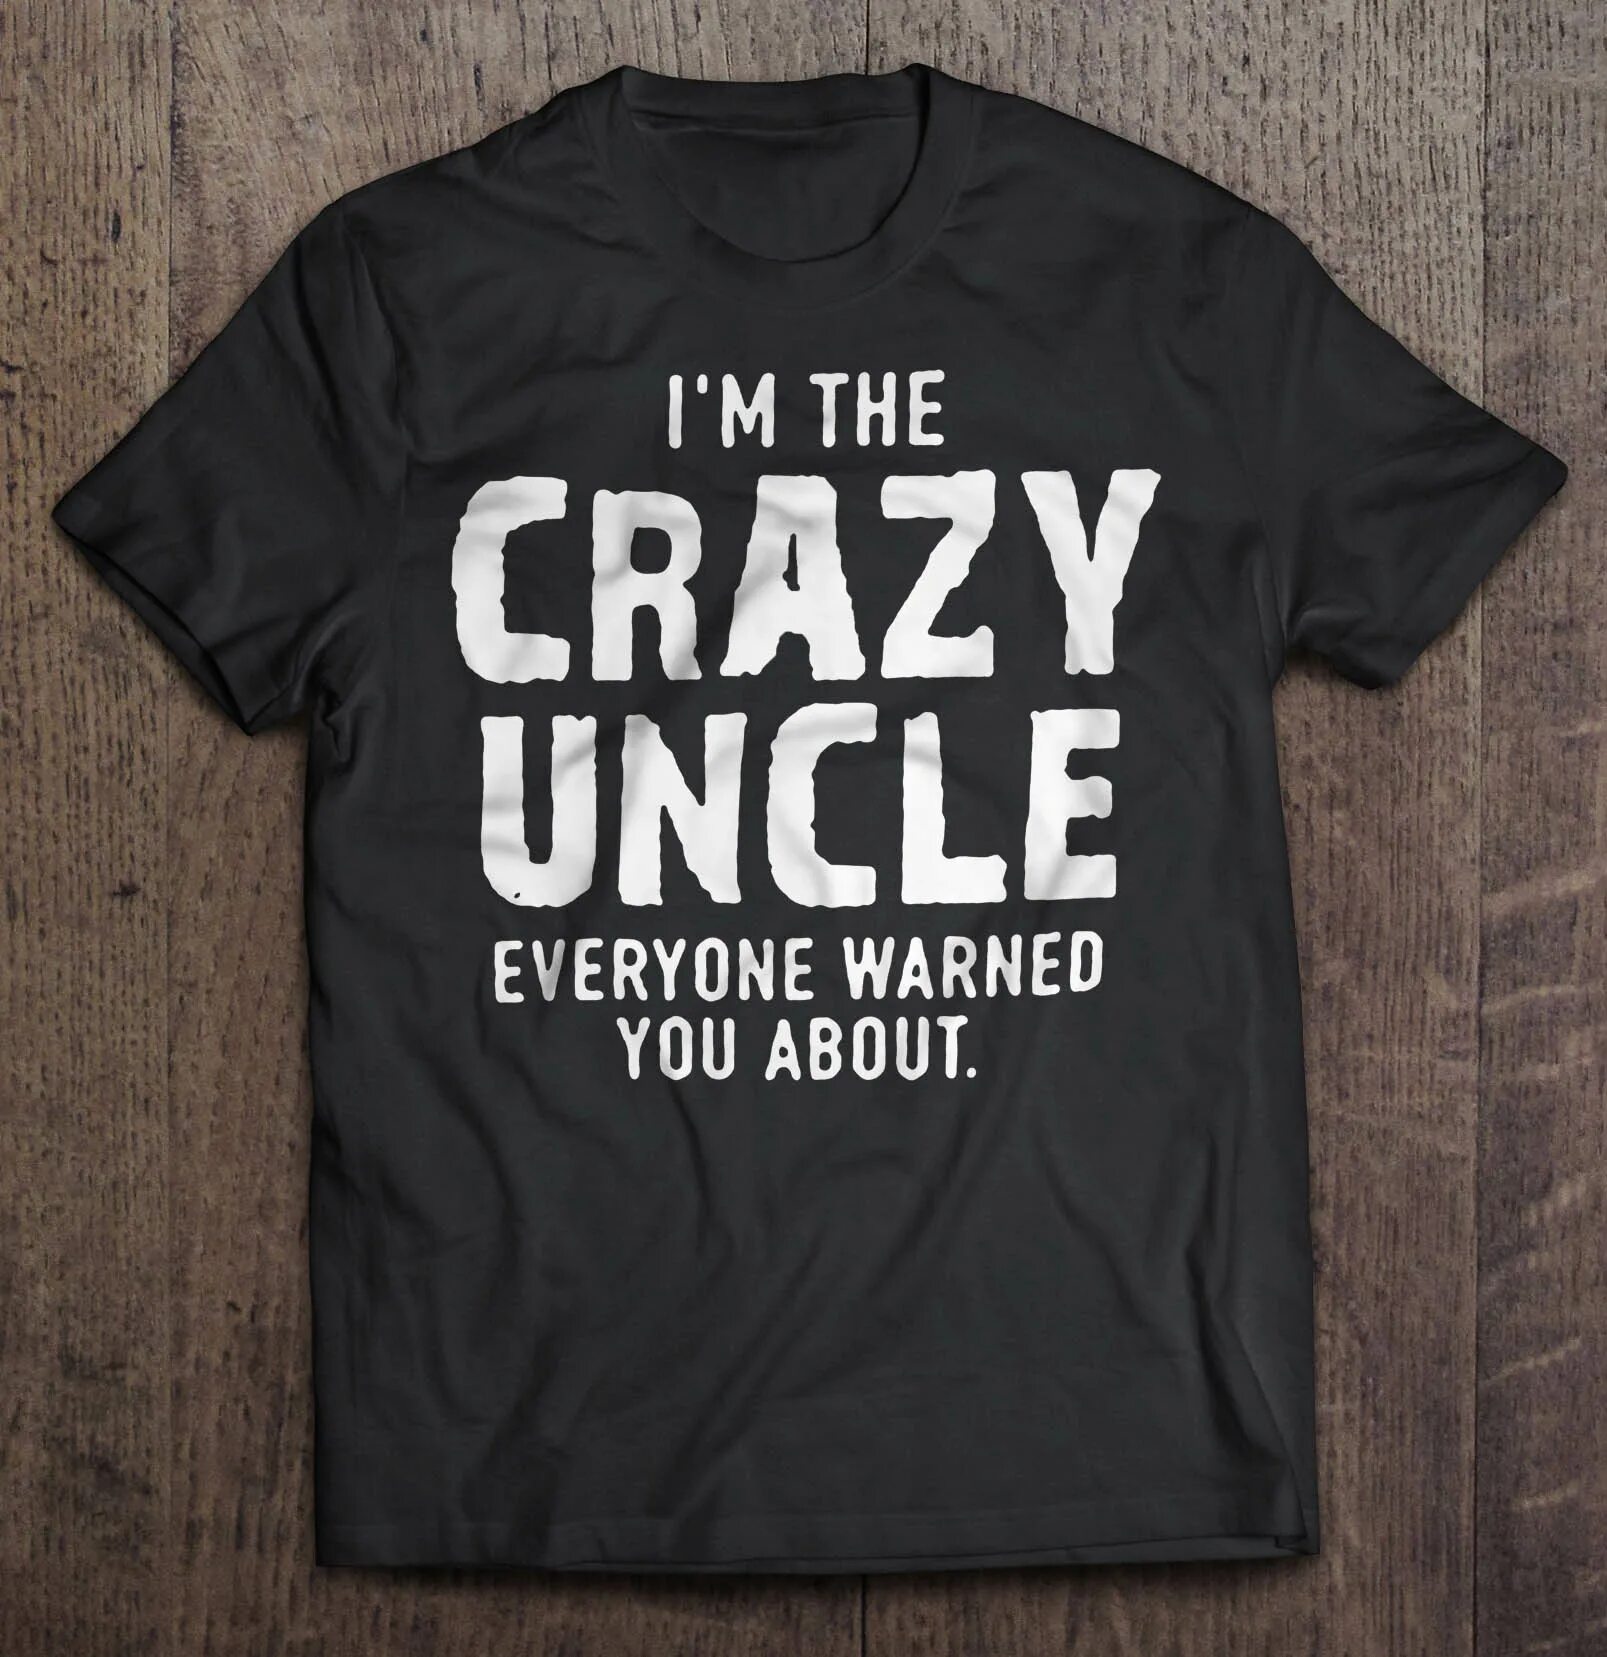 This is my uncle. I'M Crazy футболка. Expressions футболка. Crazy Uncle. Uncle Wear футболка.